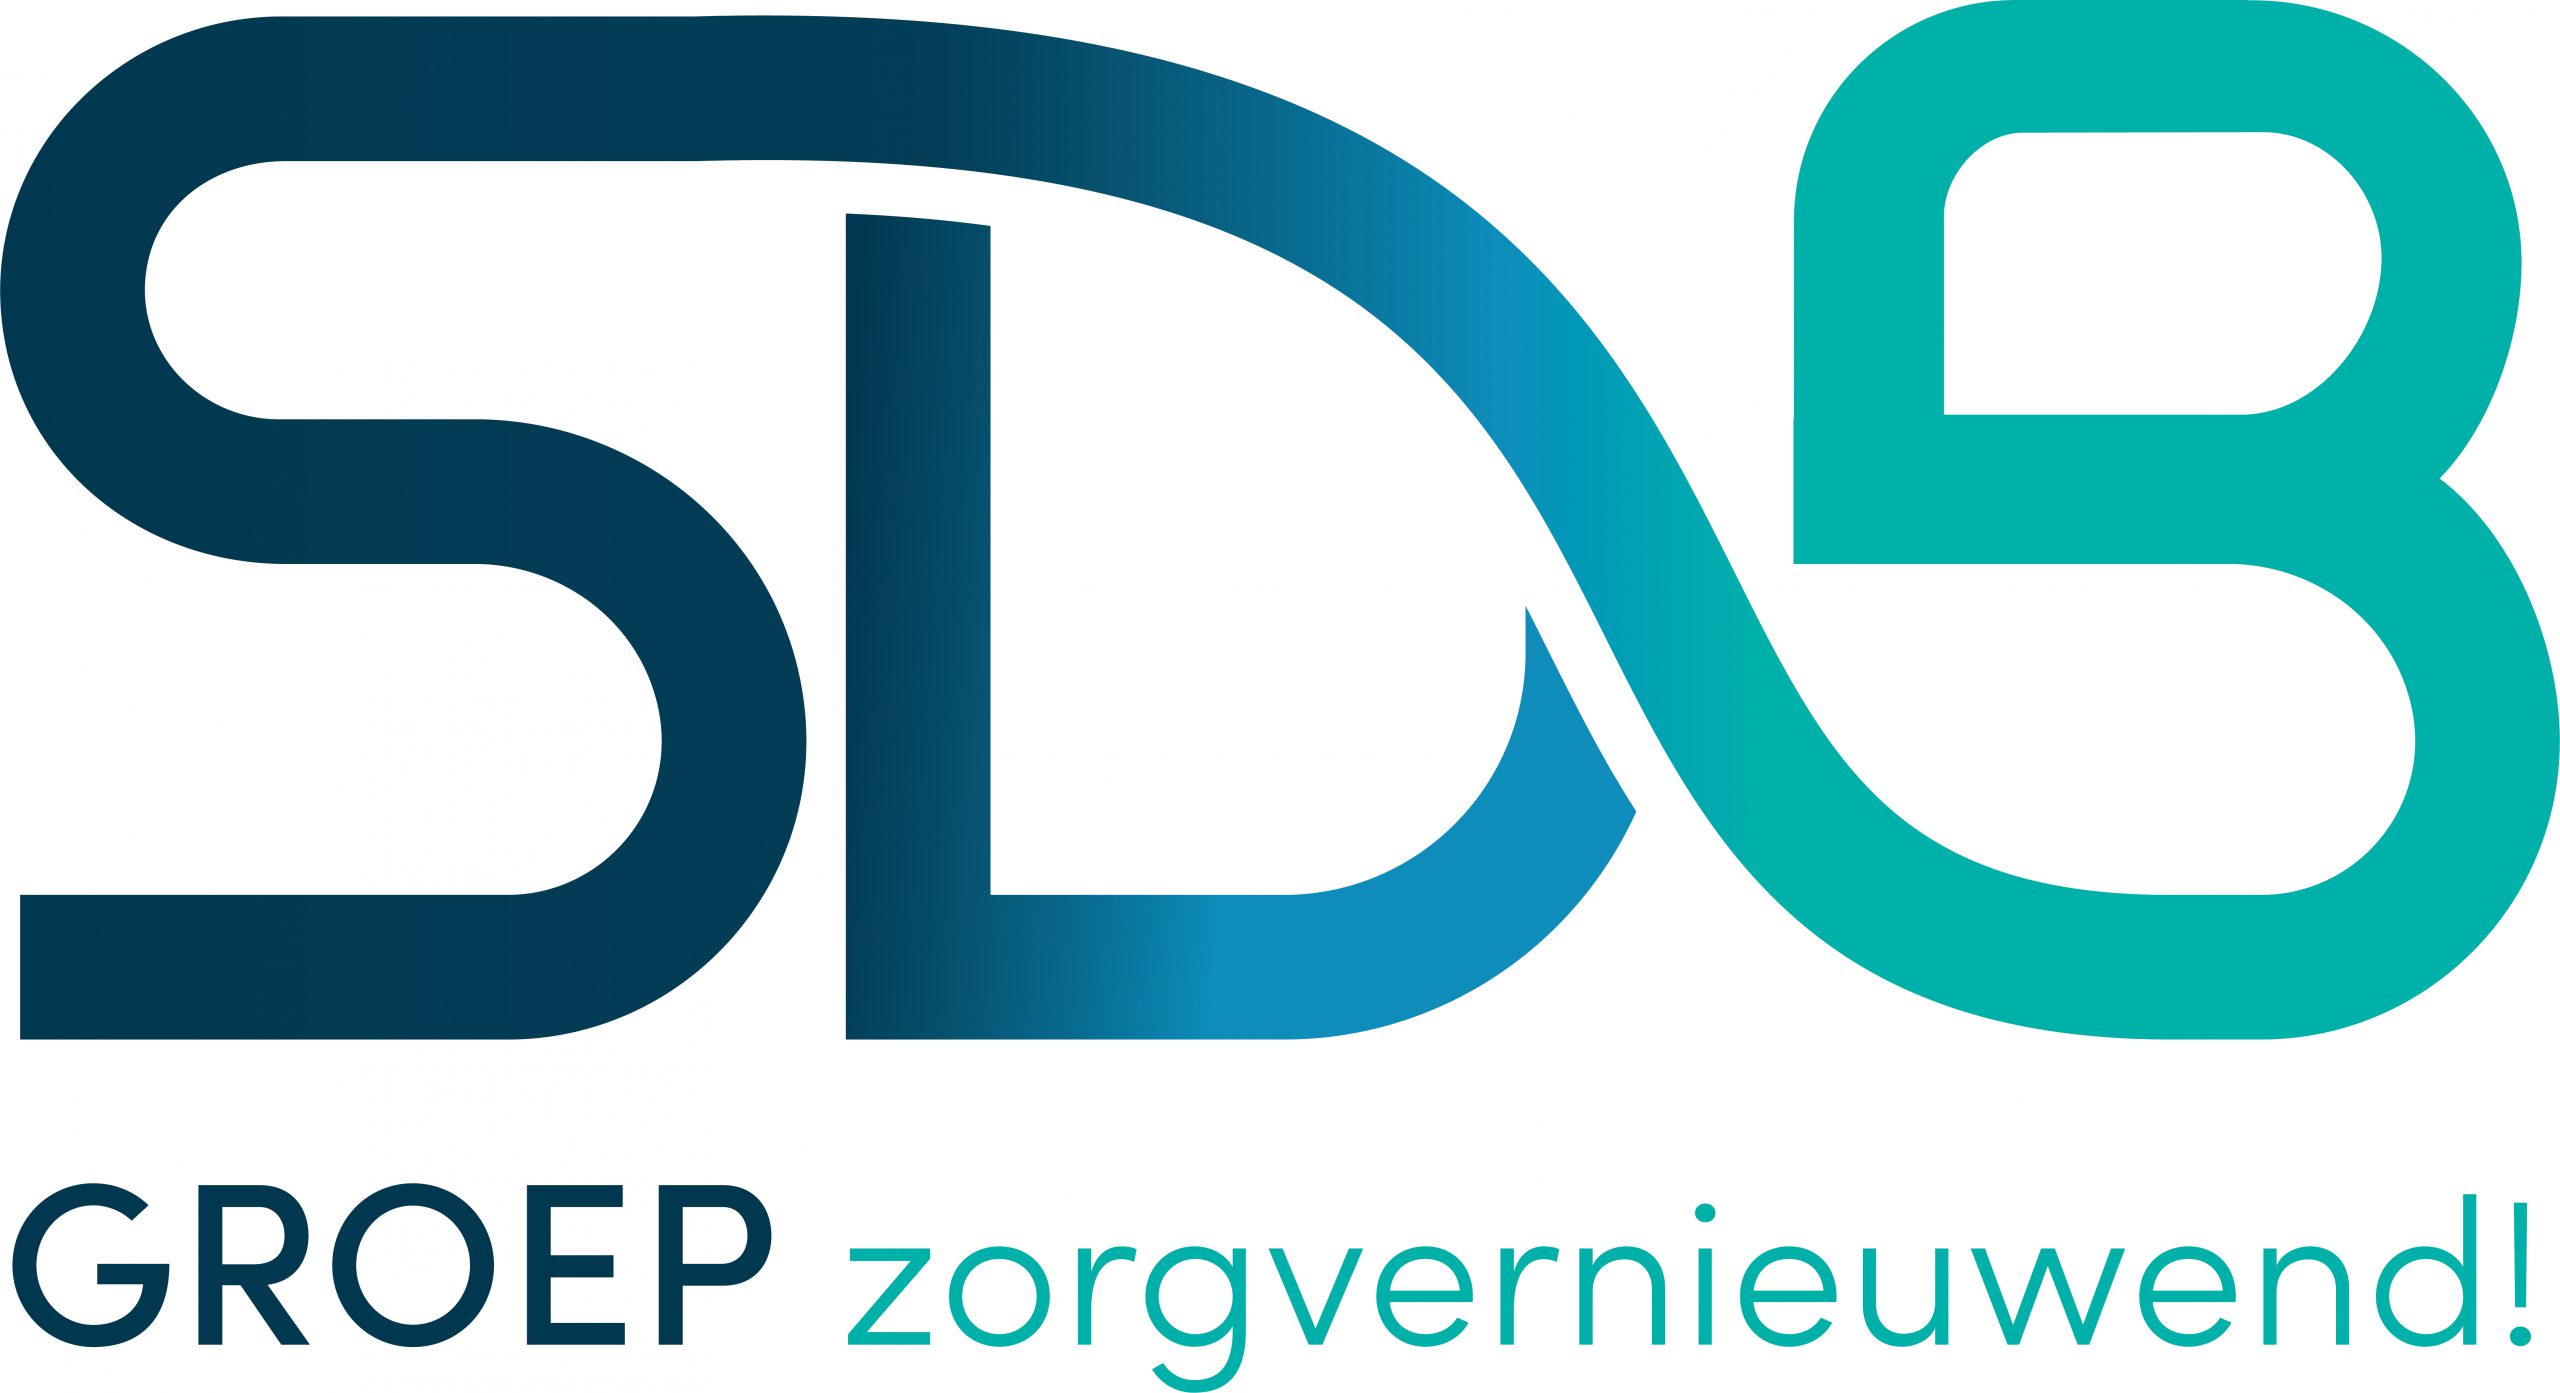 Logo-SDB-groep-zorgvernieuwend-transparent-JPEG-scaled